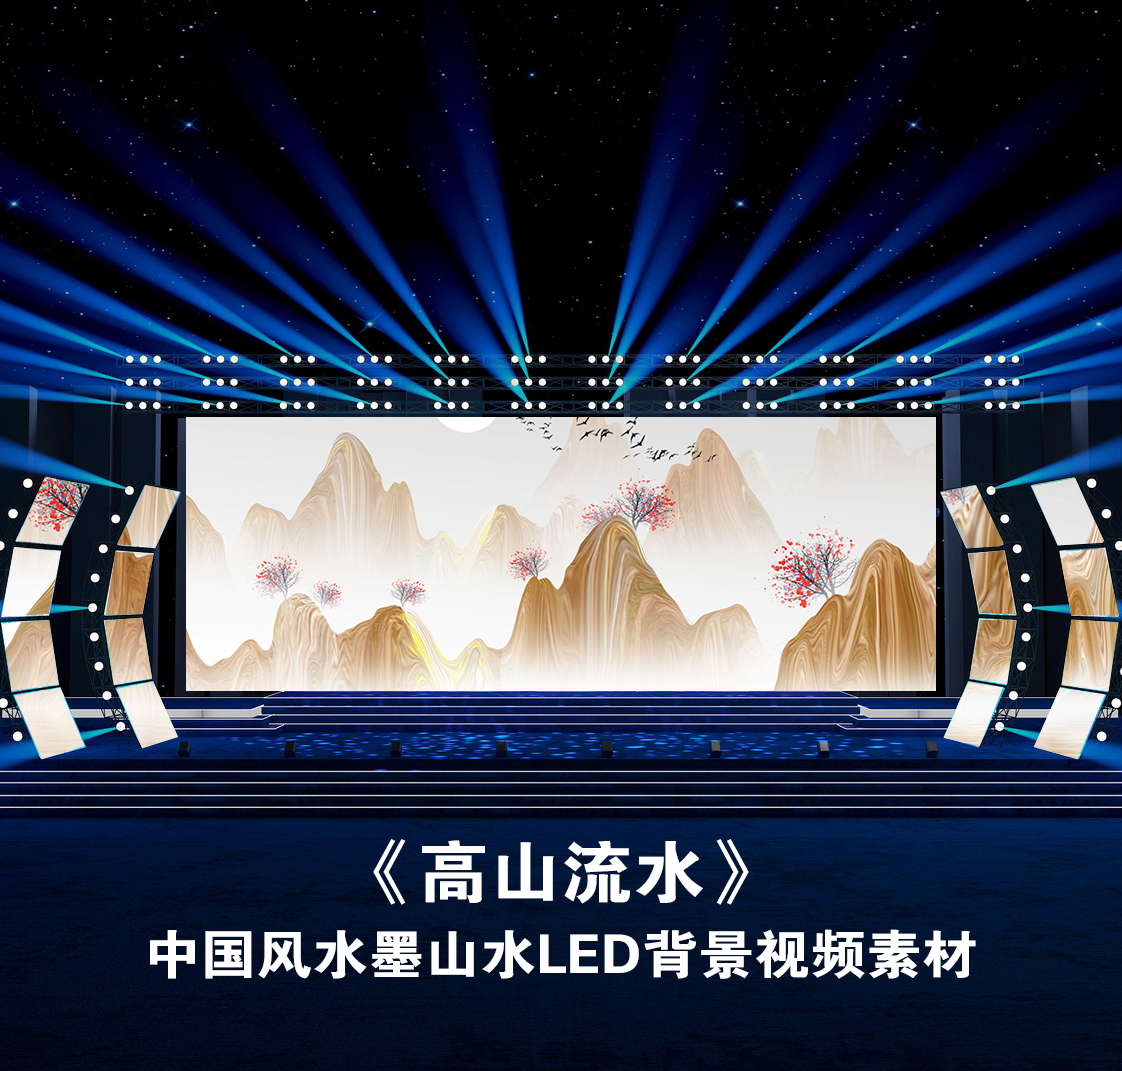 S4437 高山流水 中国风水墨山水汉服秀节目LED大屏 背景视频素